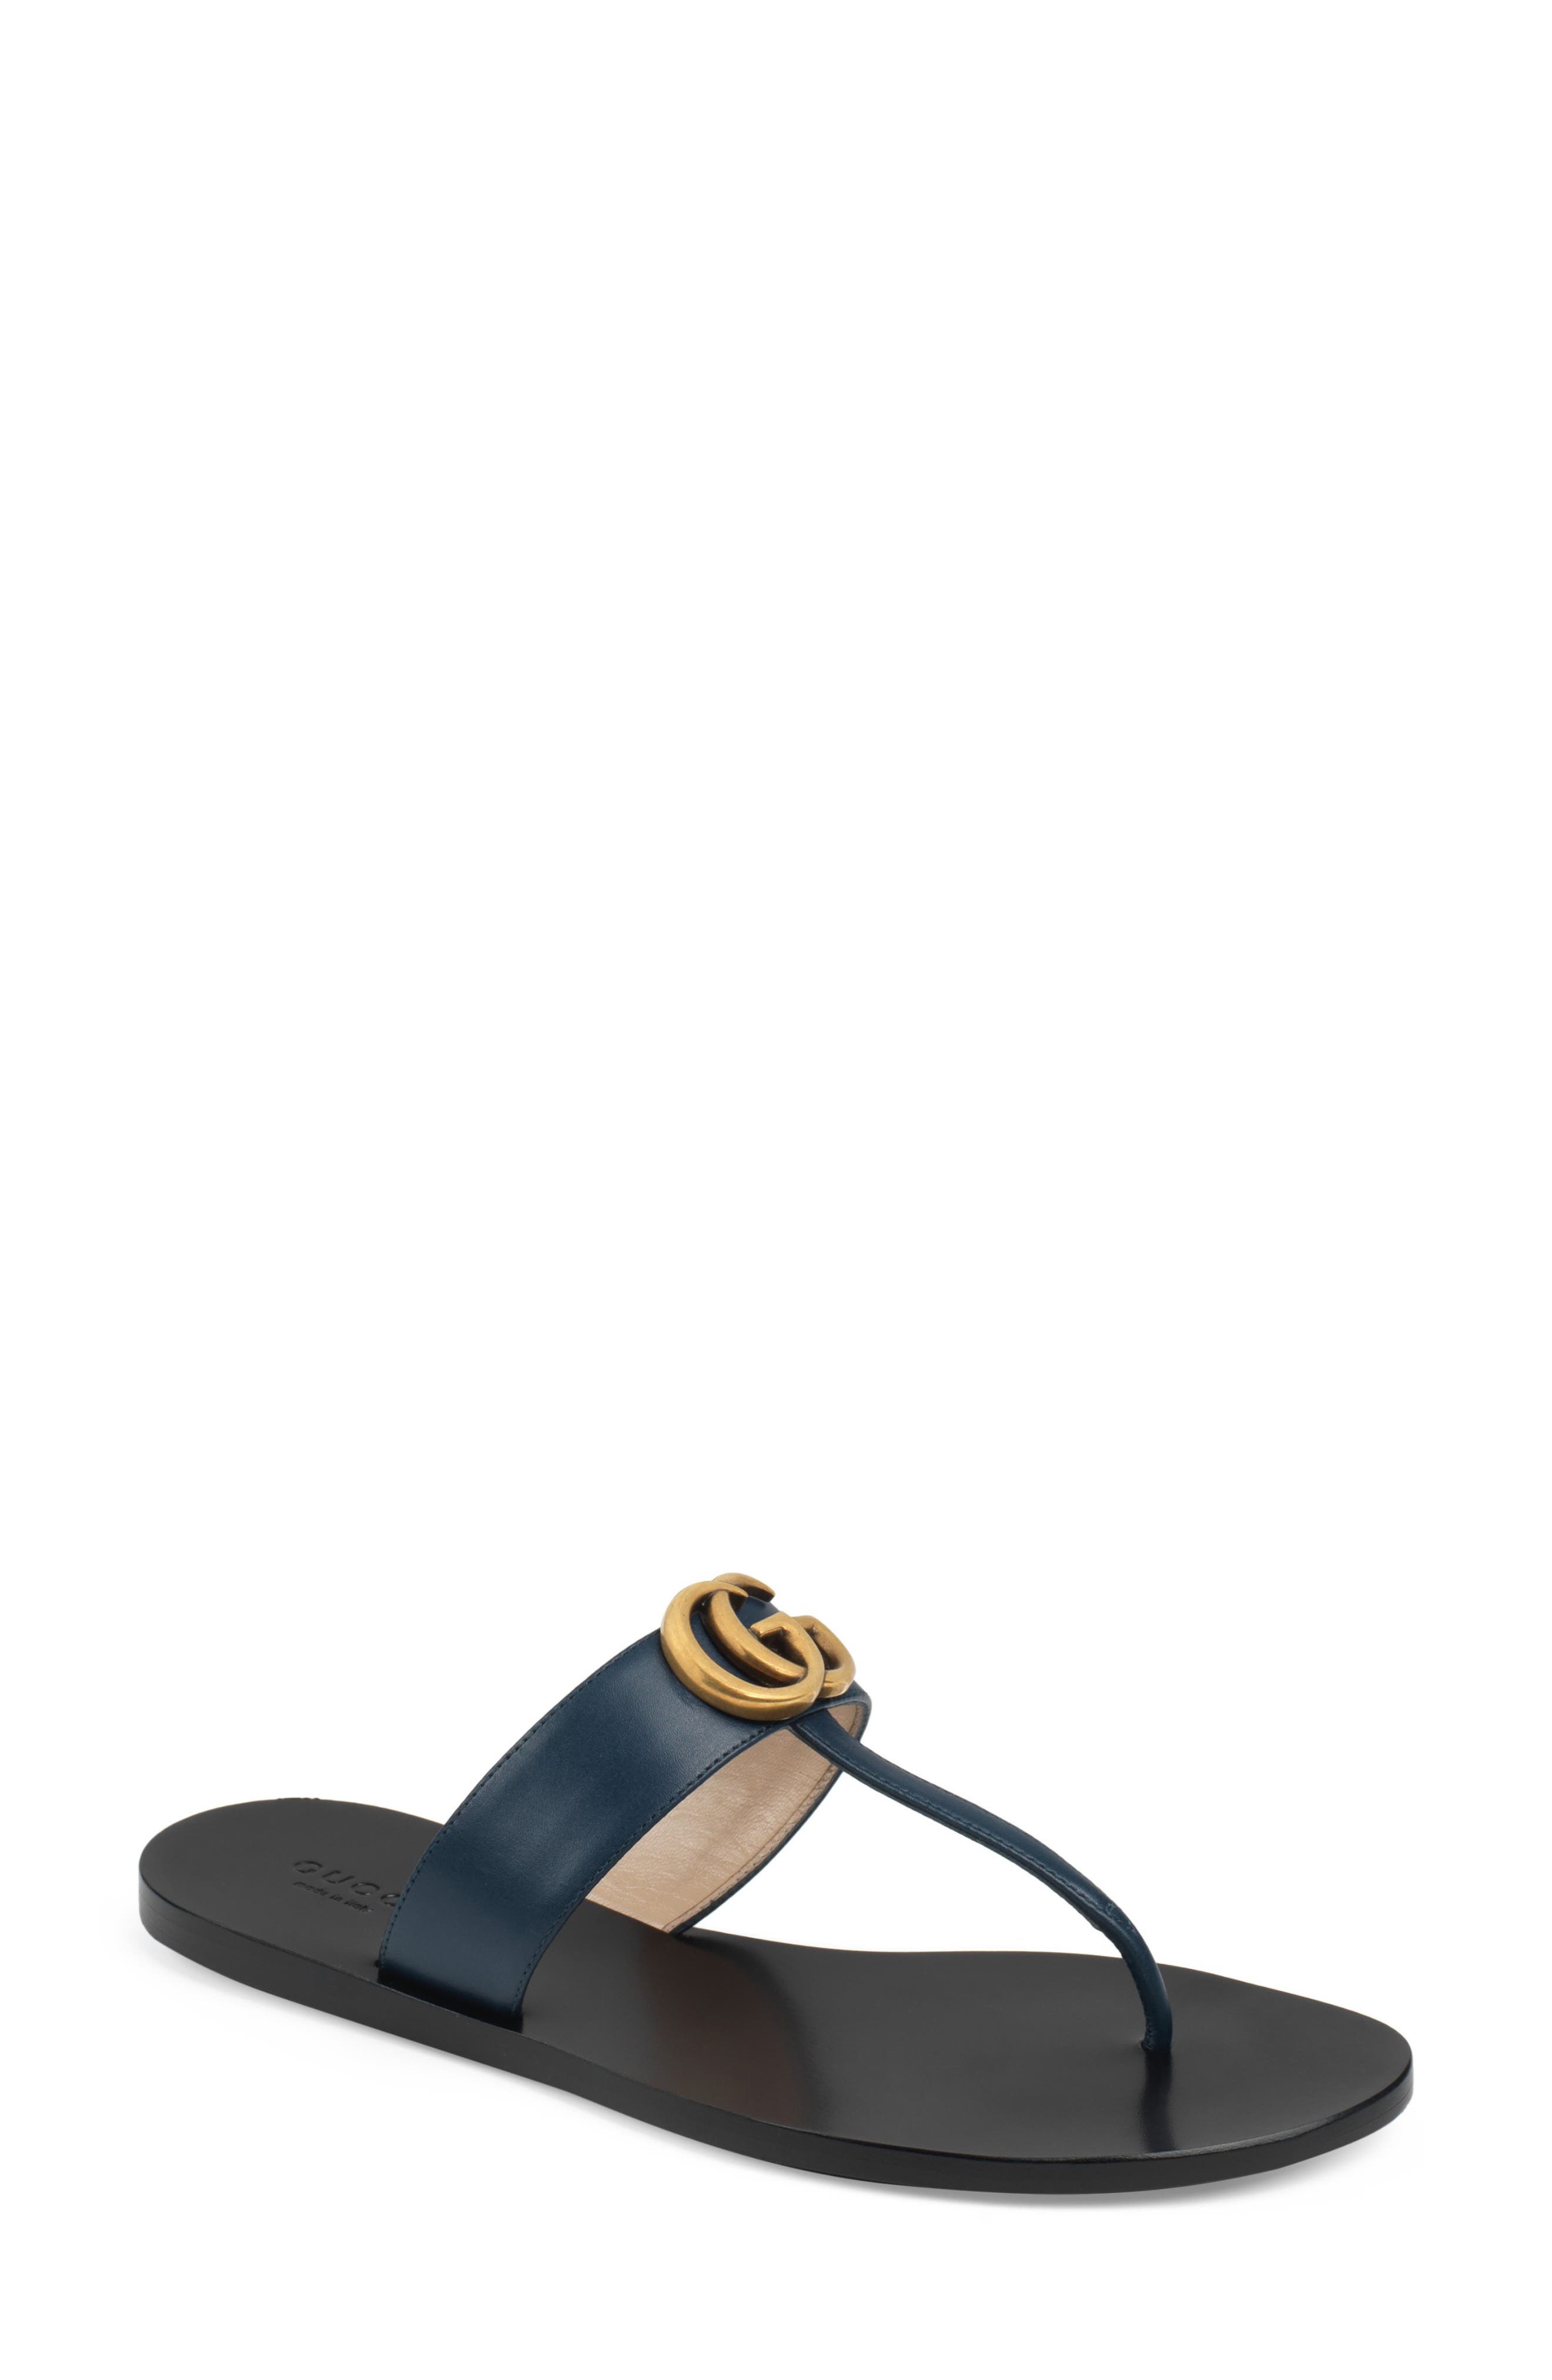 gucci thong sandals womens